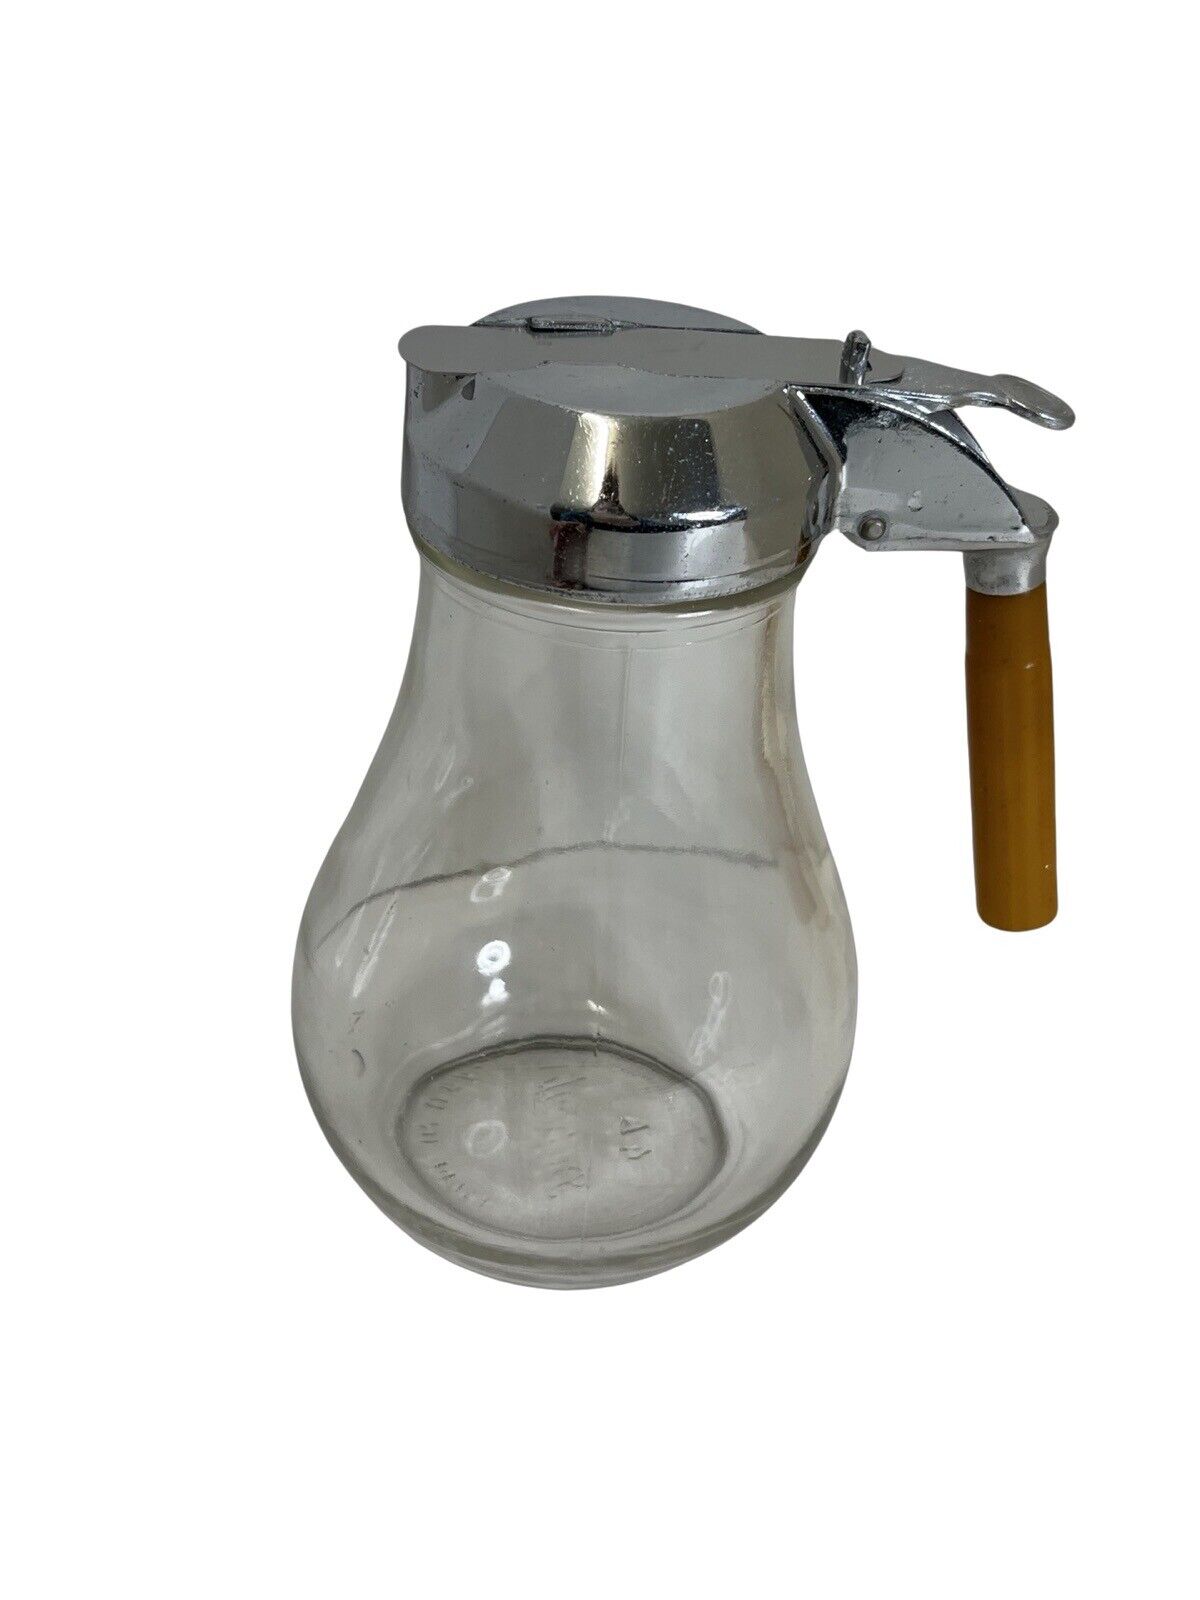 Dripcut Syrup Dispenser Lt Brown Bakelite Handle 13oz. Glass Potbelly Jar A4 VTG